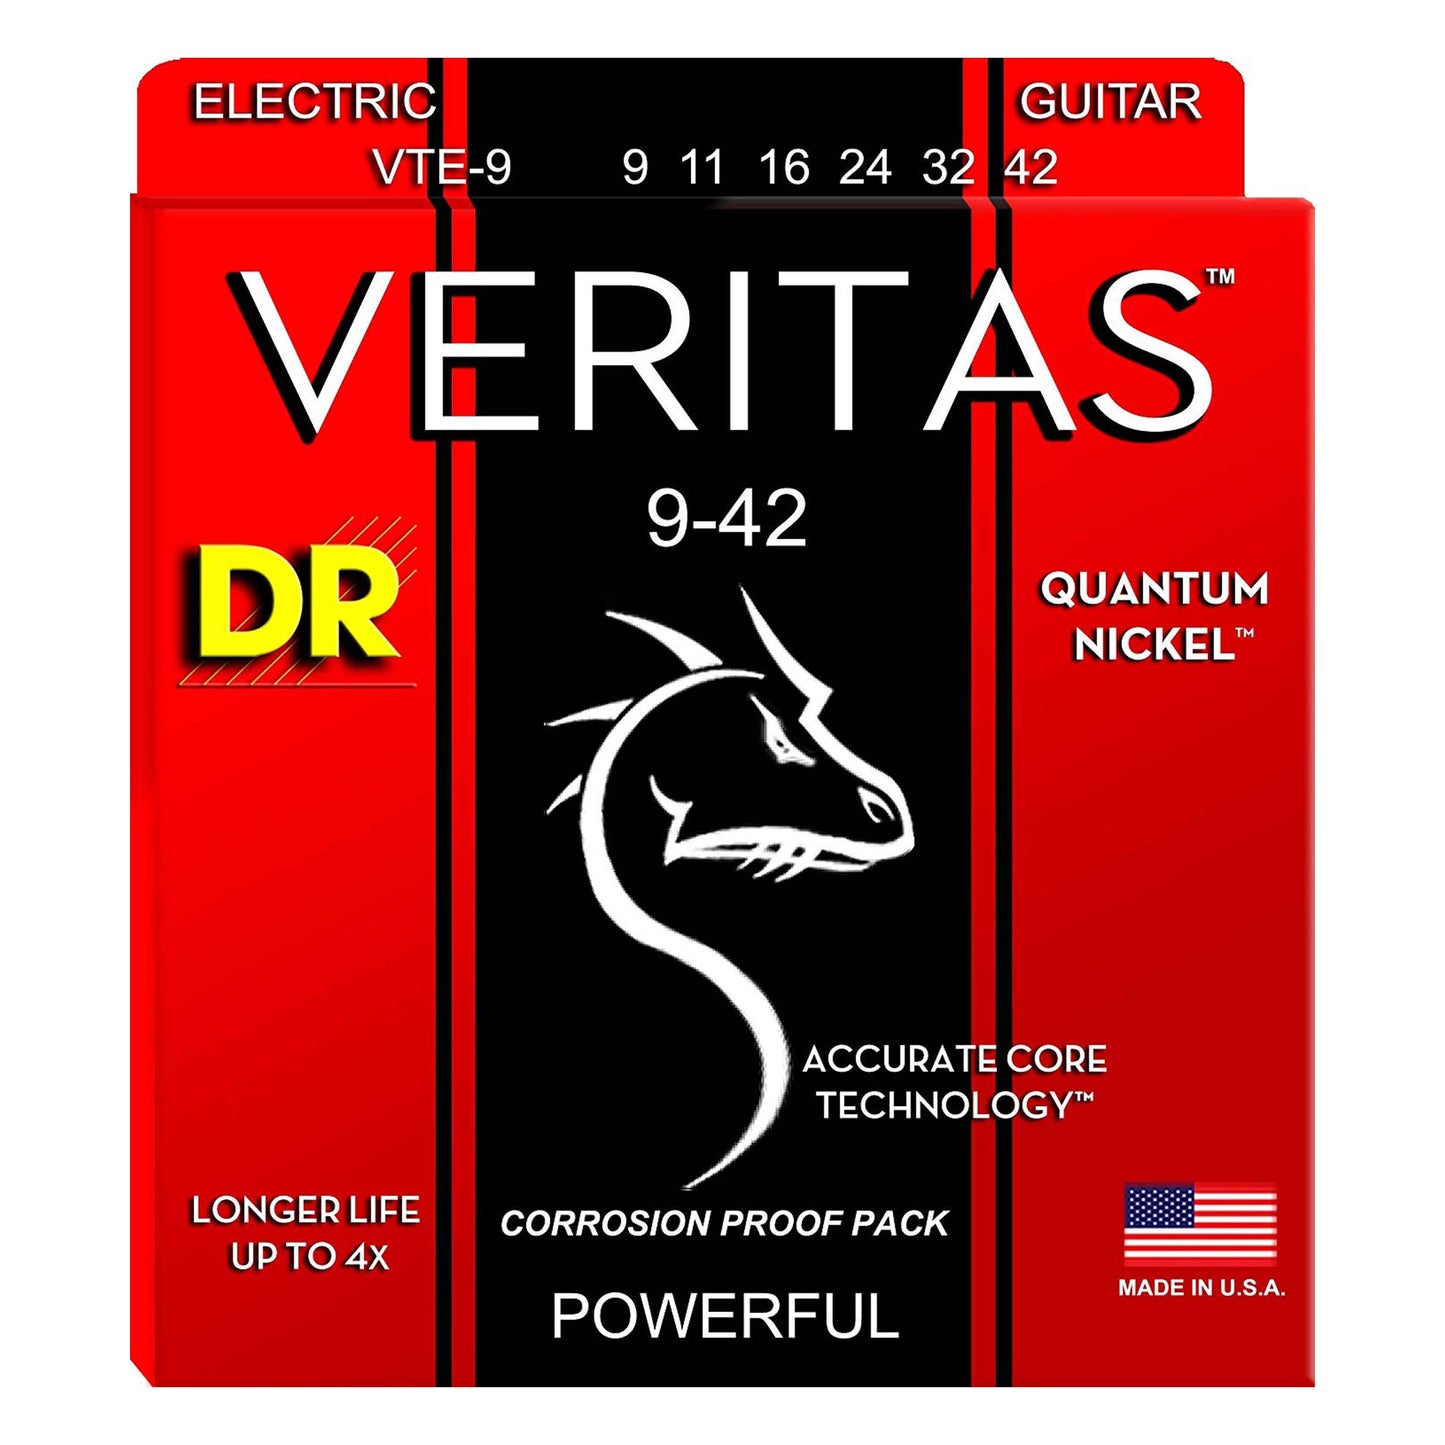 DR Strings VTE-9 VERITAS Electric Guitar String 9-42